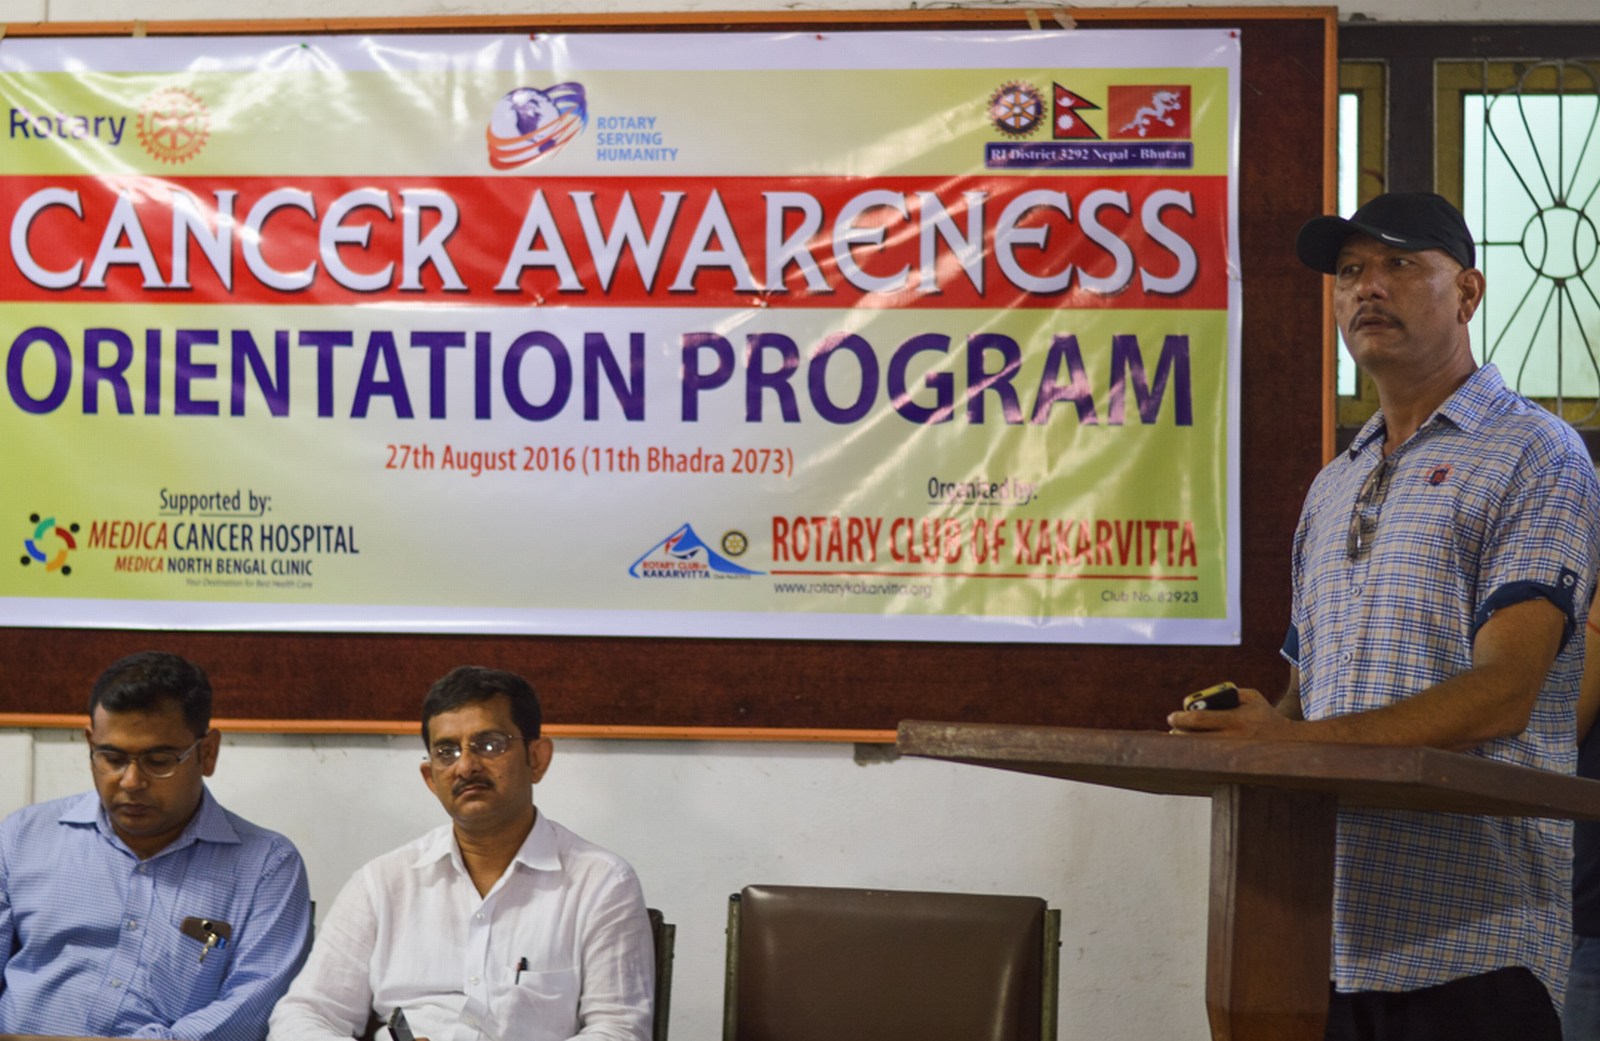 Cancer-Awareness-Orientation-Program-2016-Rotary-Club-of-Kakarvitta-3